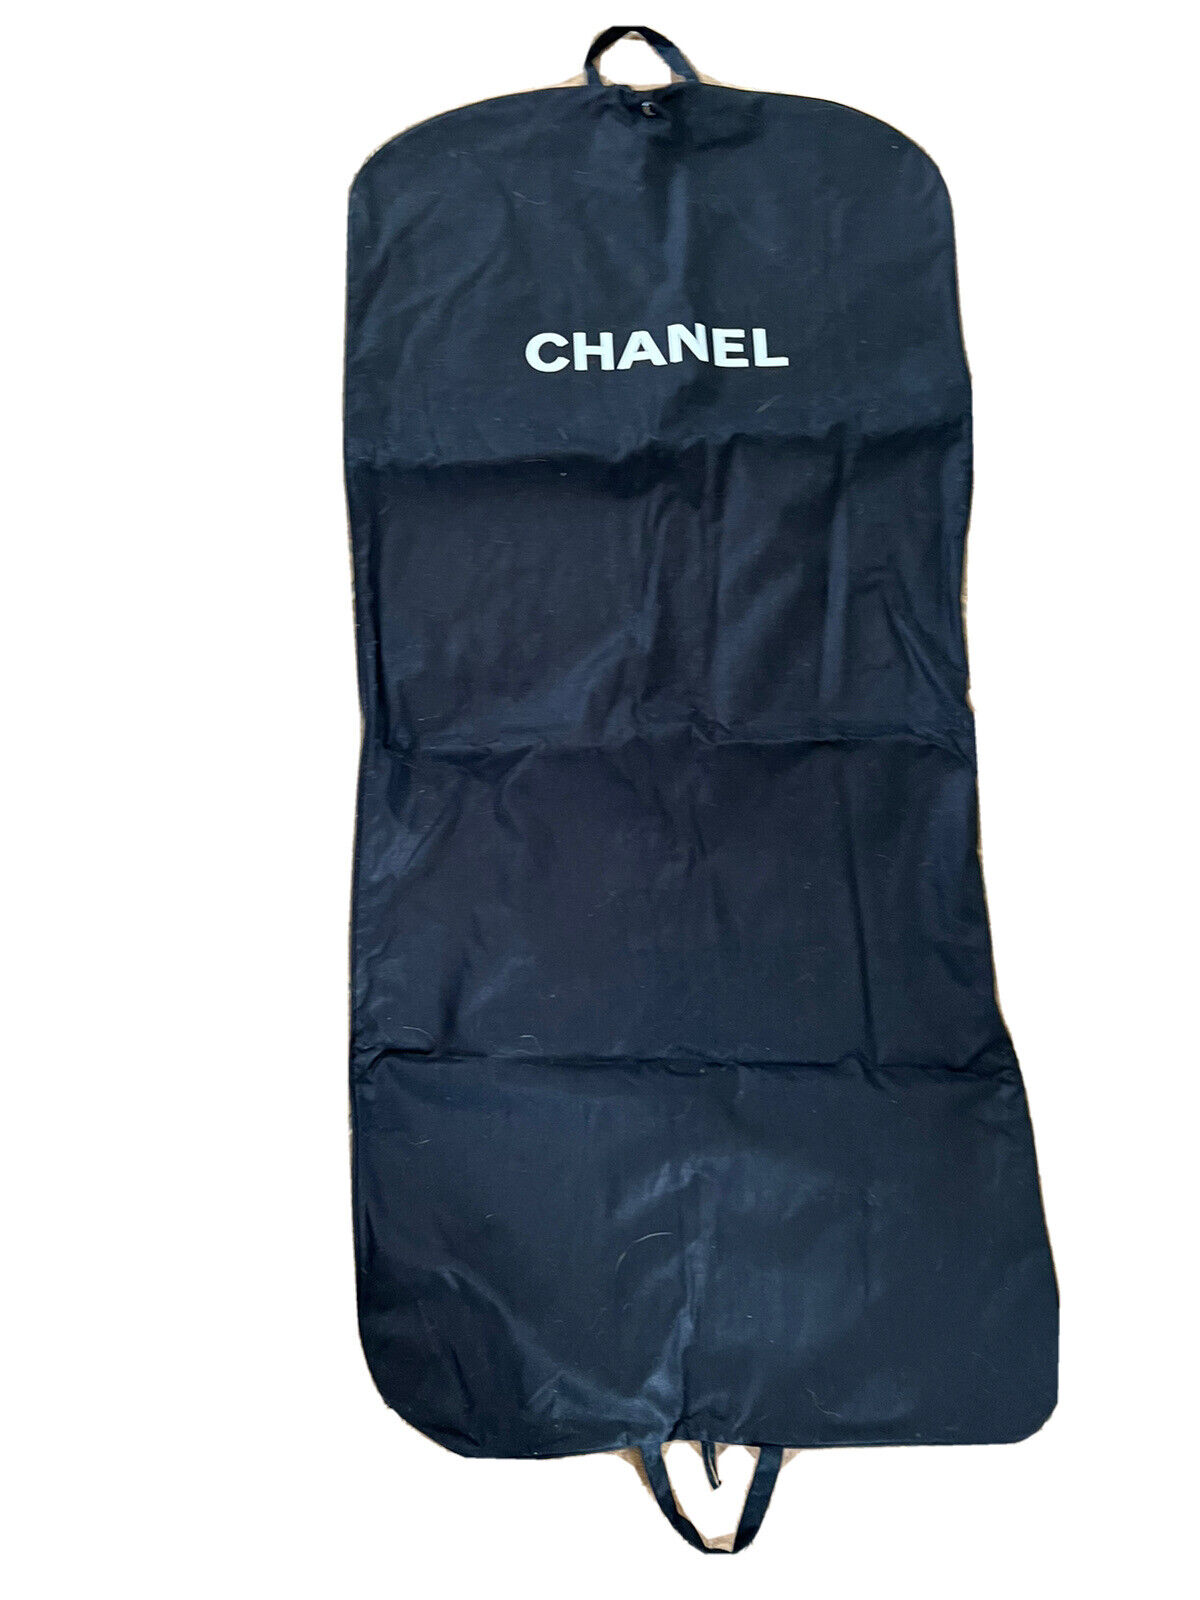 Chanel Expandable Short Garment Bag 49” Long